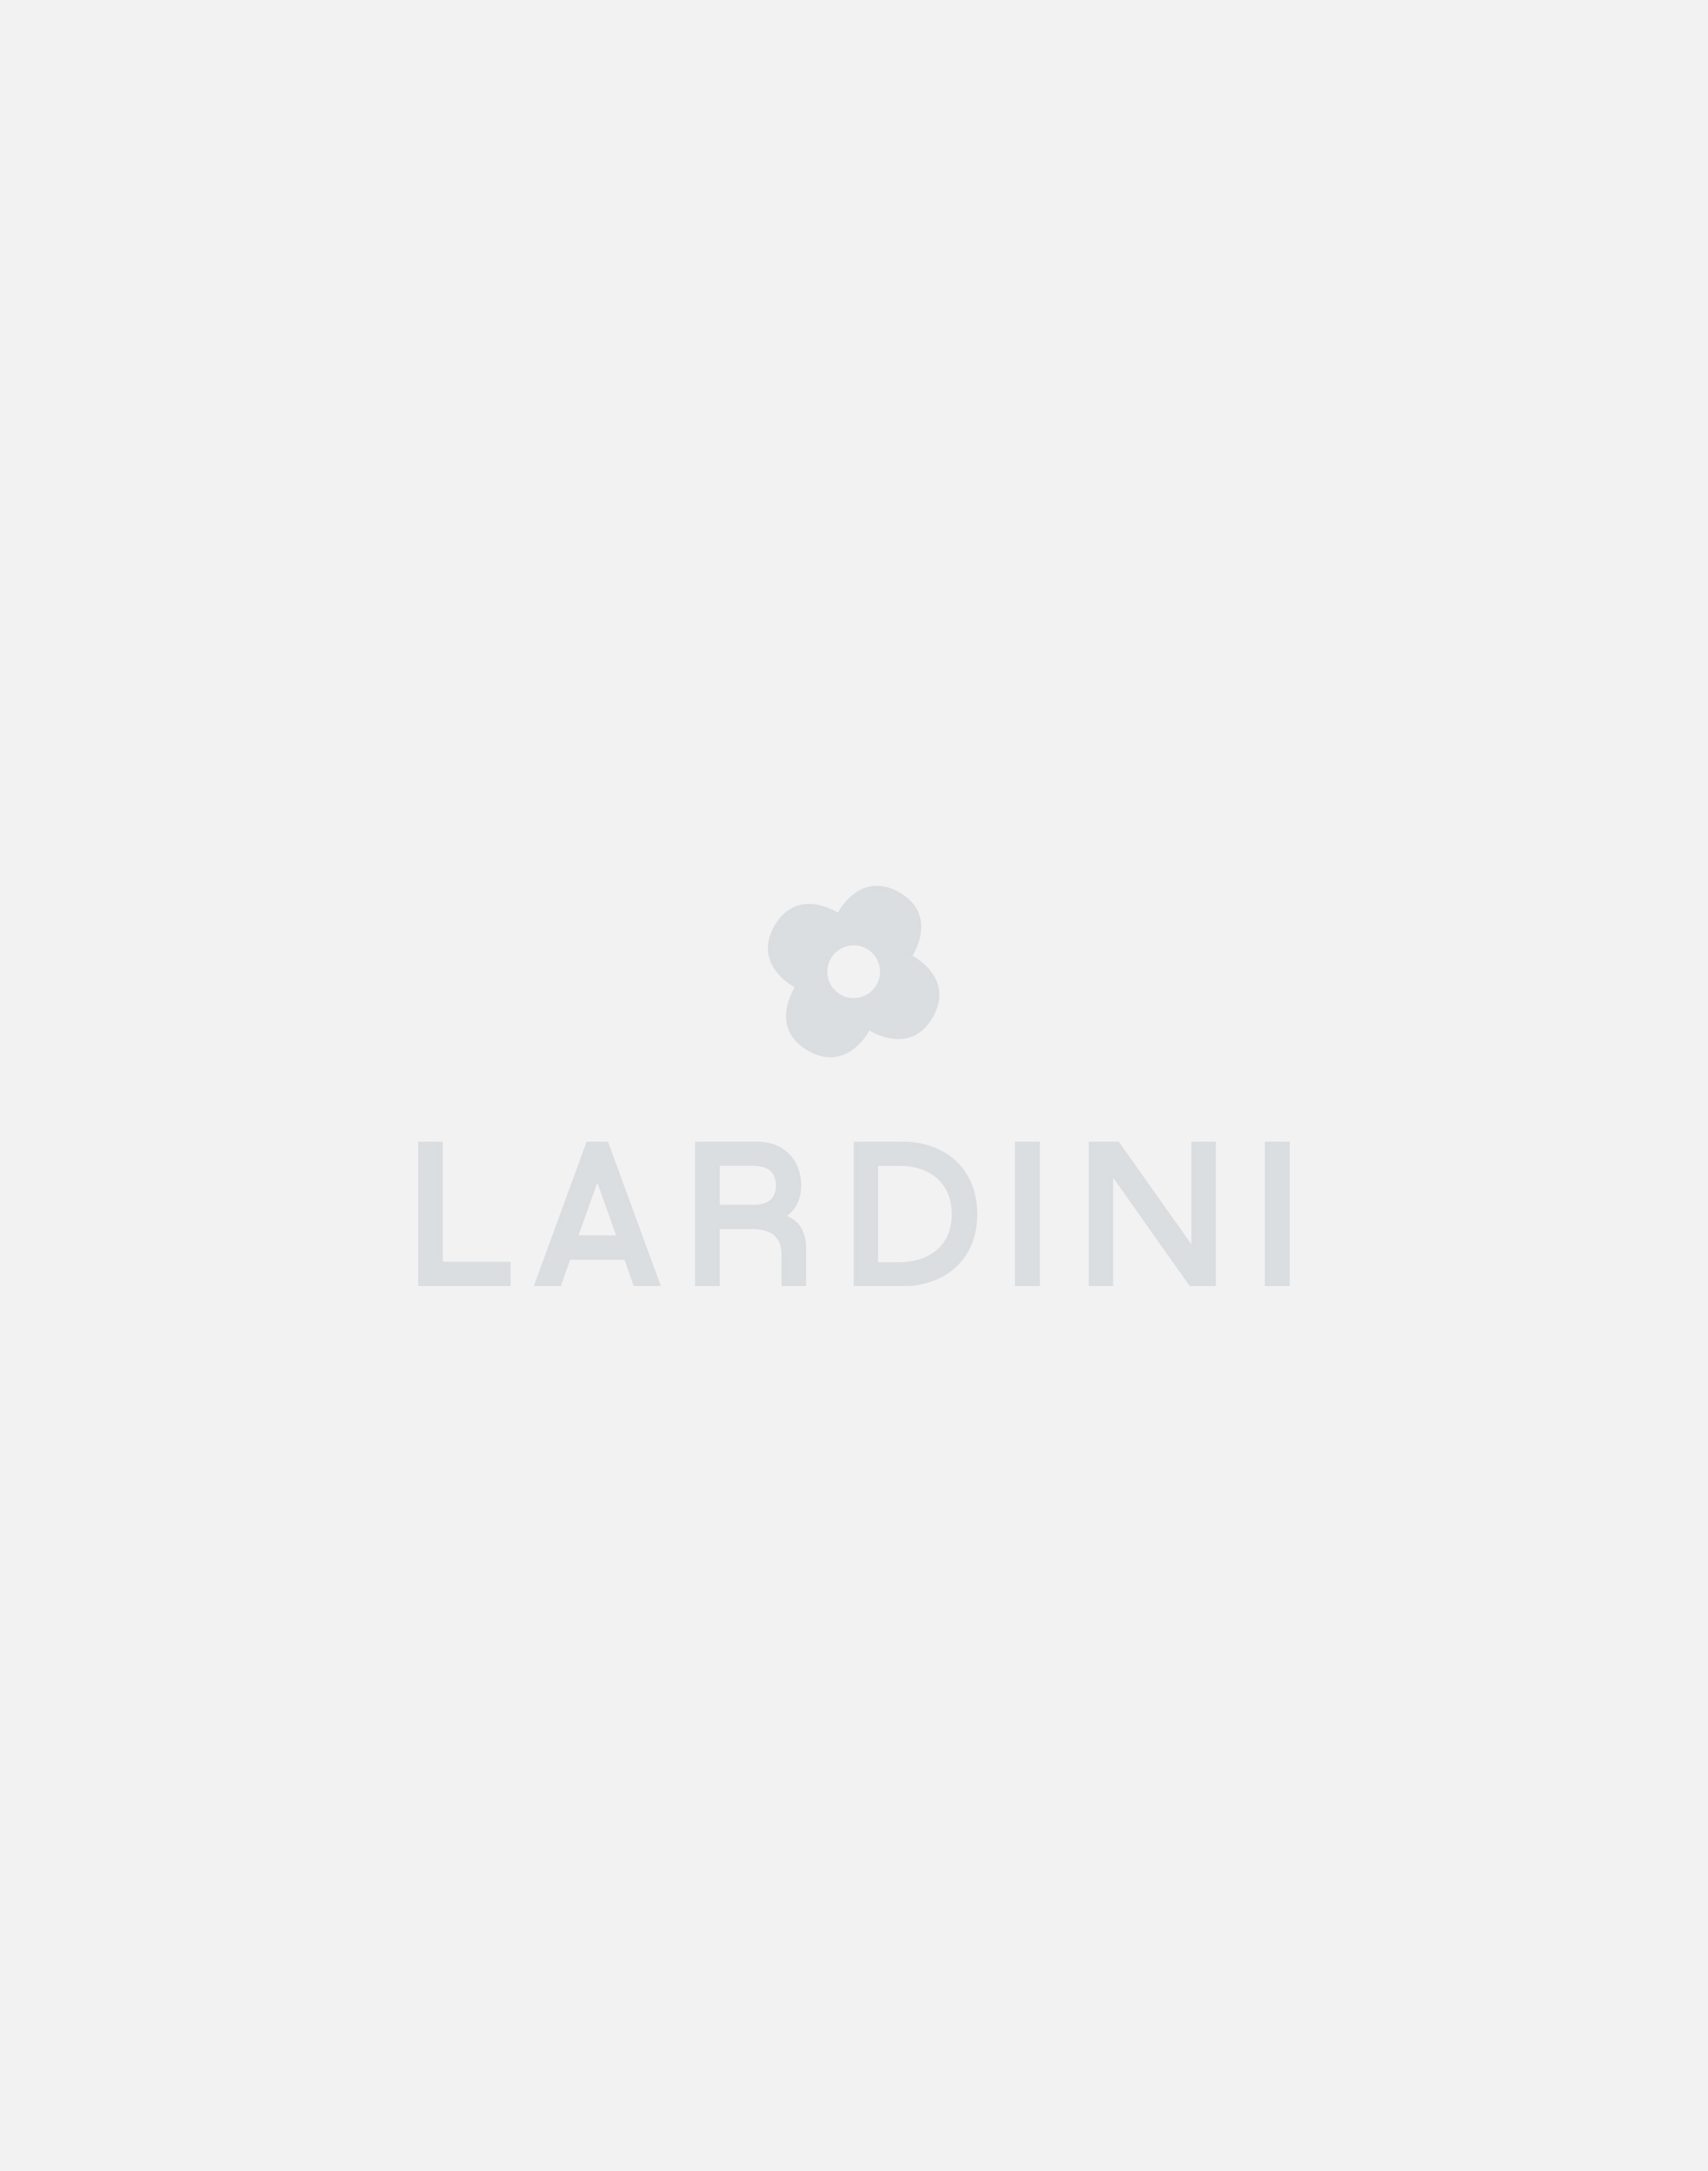 T-shirt with matching embroidery - Luigi Lardini capsule 4